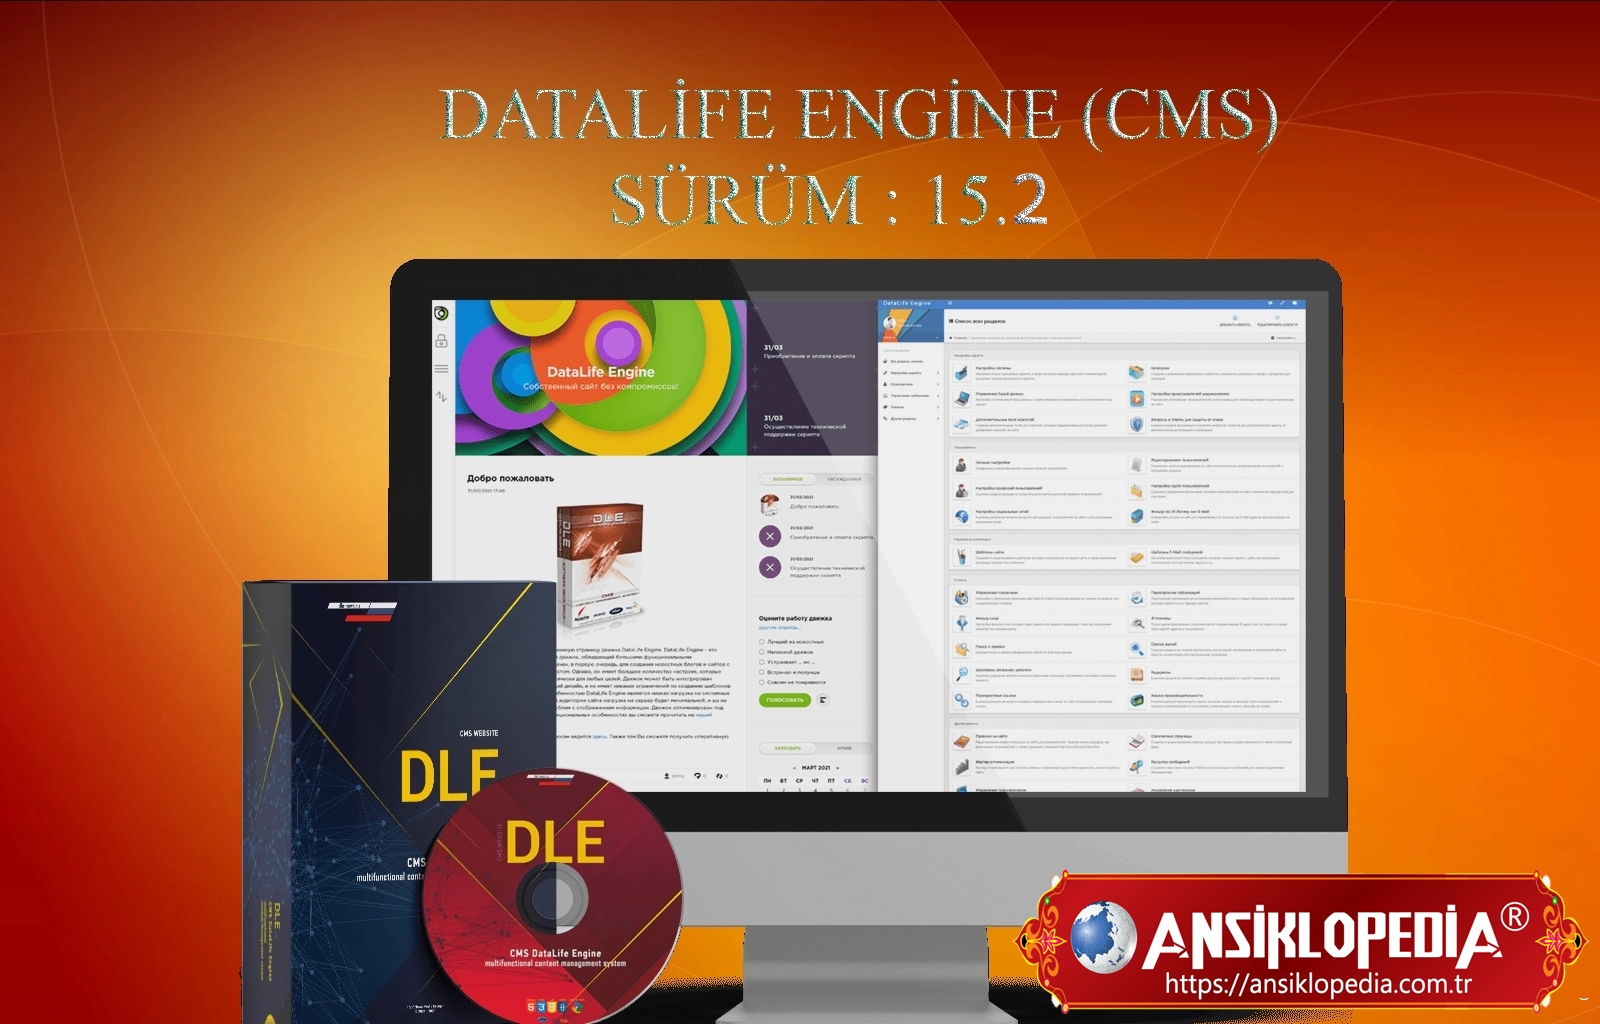 Datalife Engine CMS V.15.2 Sürümü